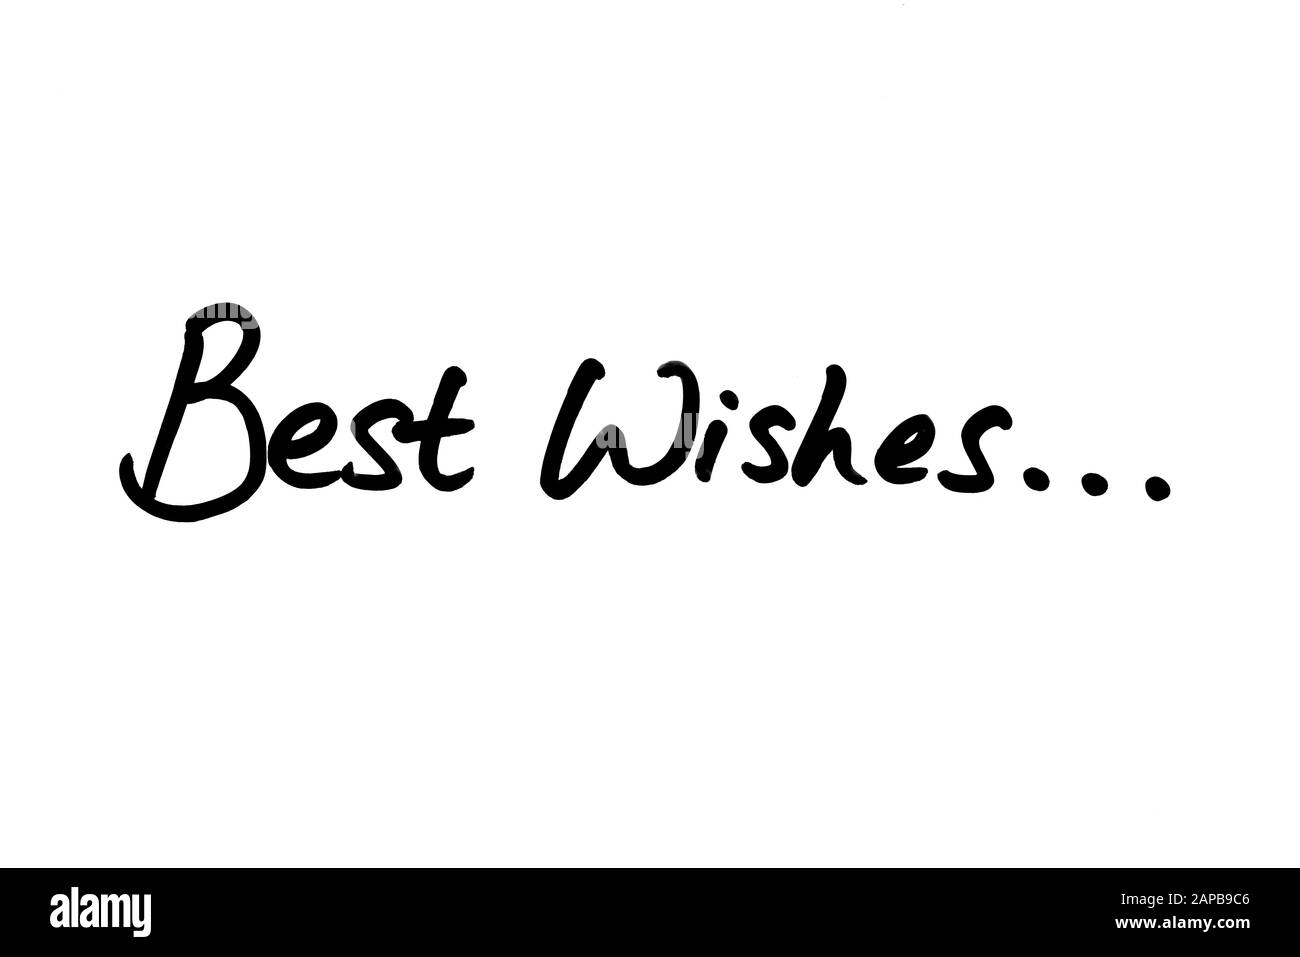 Best Wishes… handwritten on a white background. Stock Photo